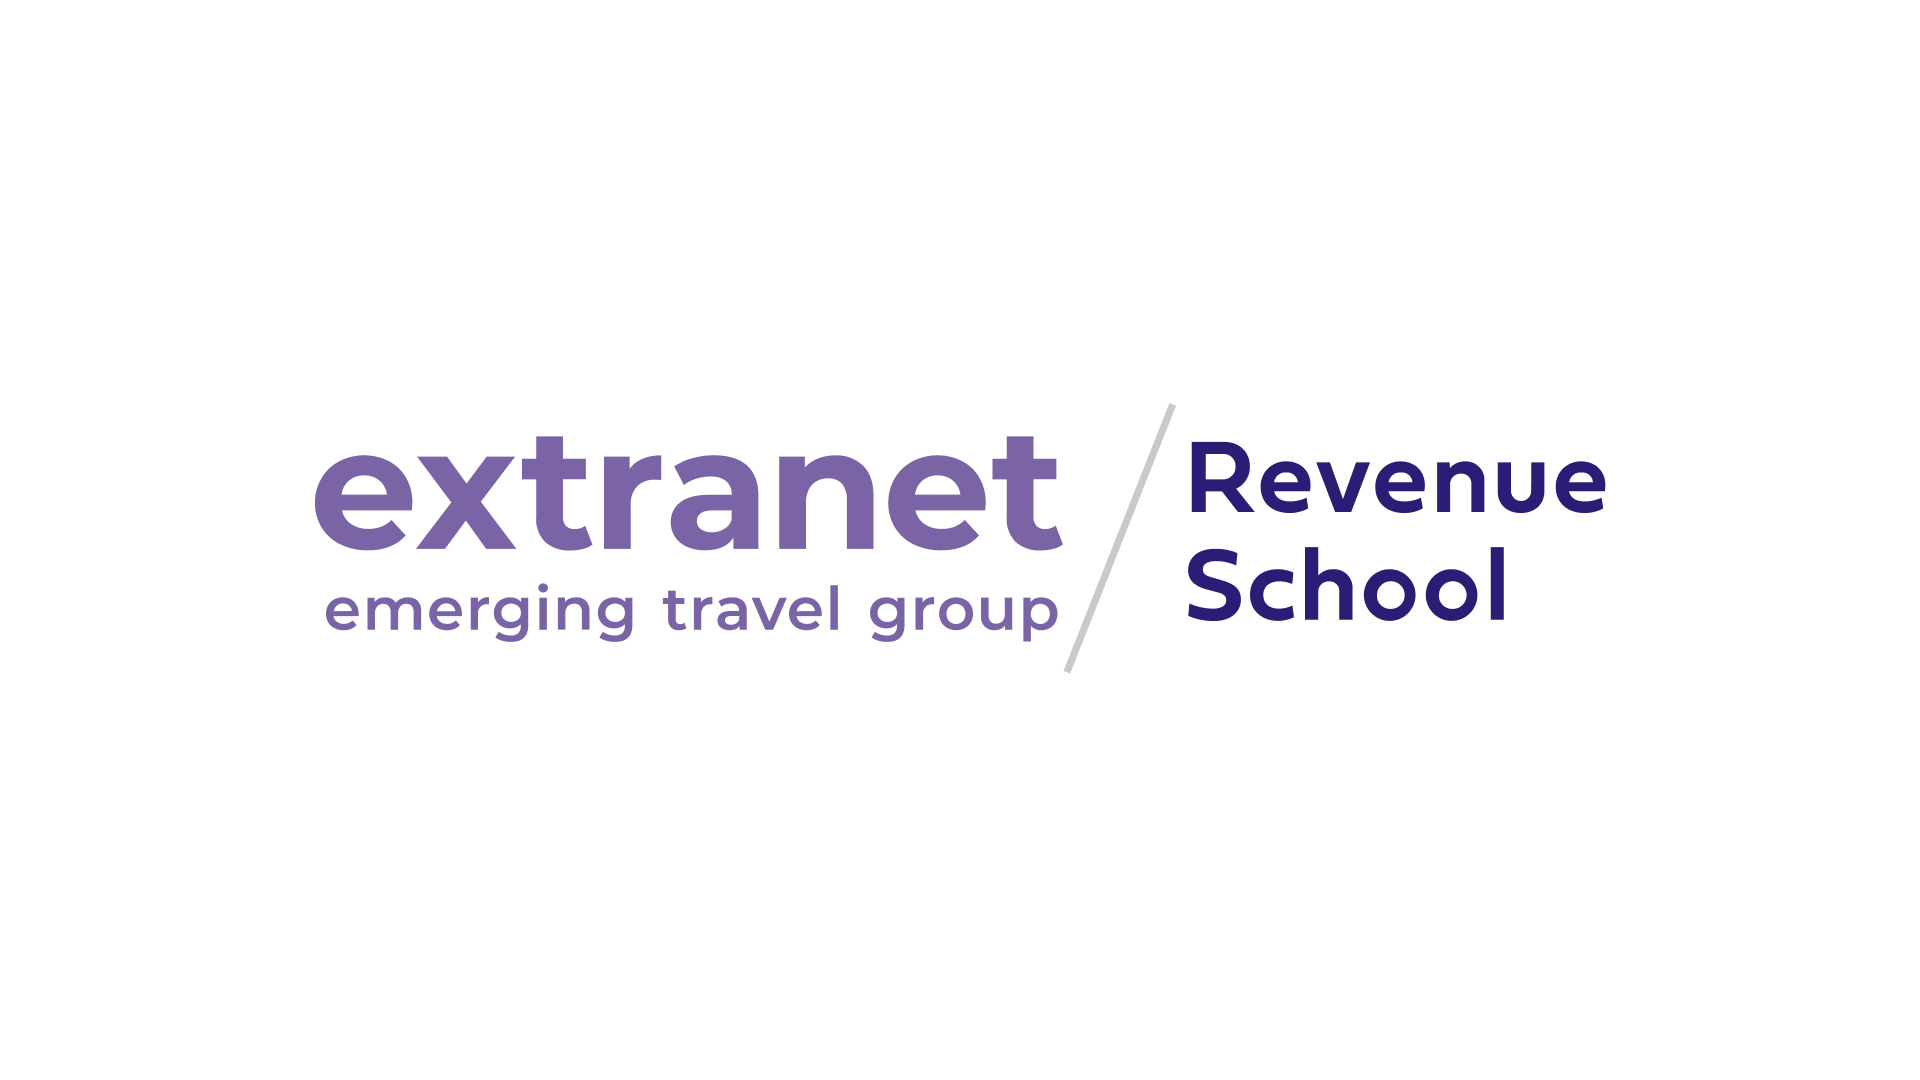 Emerging Travel Group. Extranet emerging Travel. Emerging Travel Group презентации. Extranet островок. Emerging travel